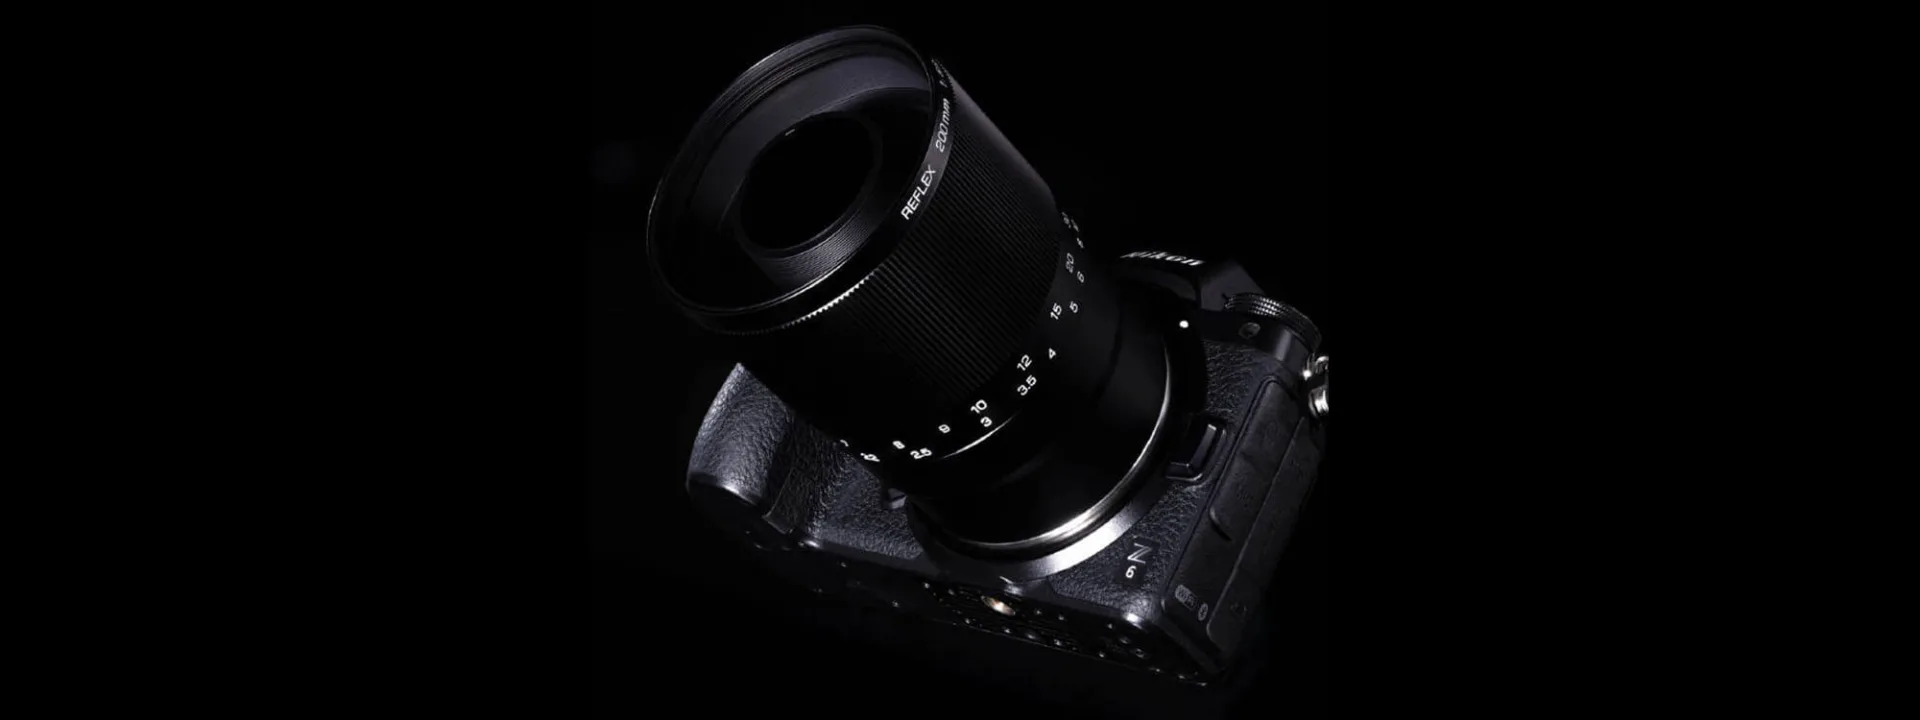 Kase 200mm f5.6 full frame manual focus lens 3.jpeg